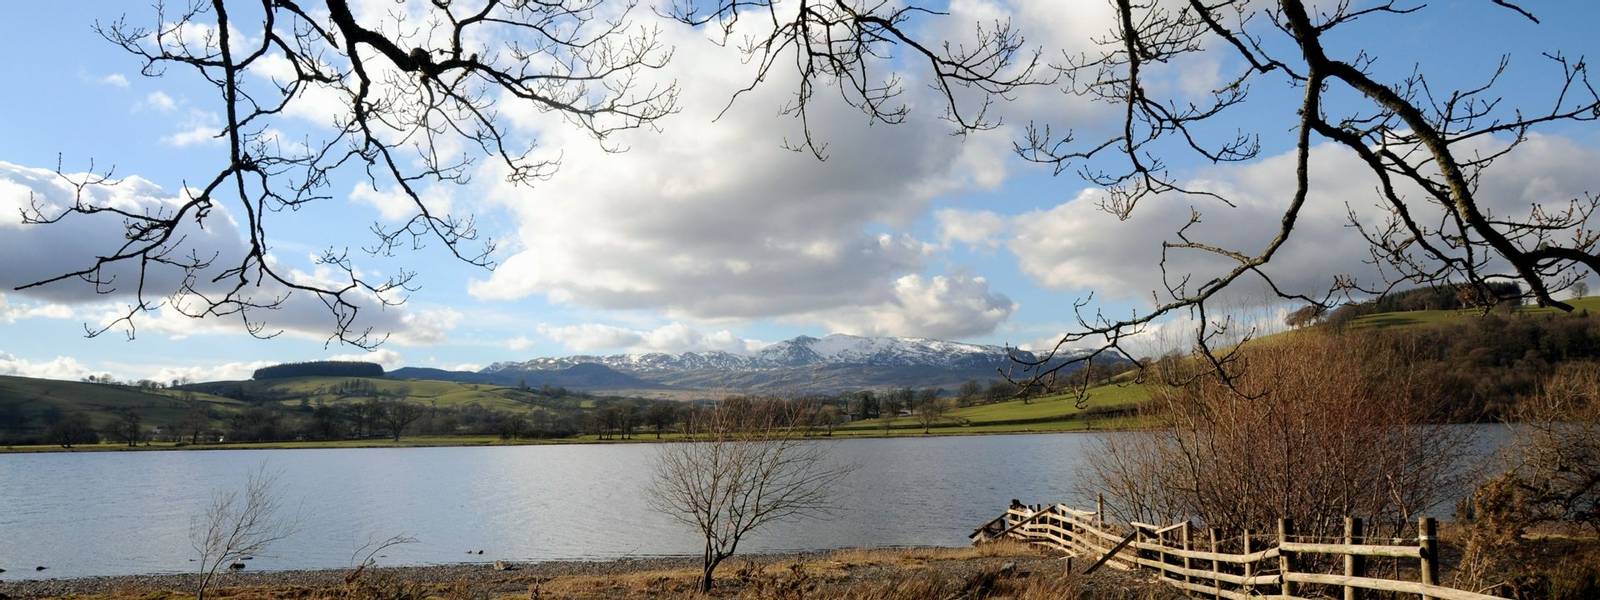 Southern Snowdonia - Dolgellau -Spring and Winter - AdobeStock_105299598.jpeg